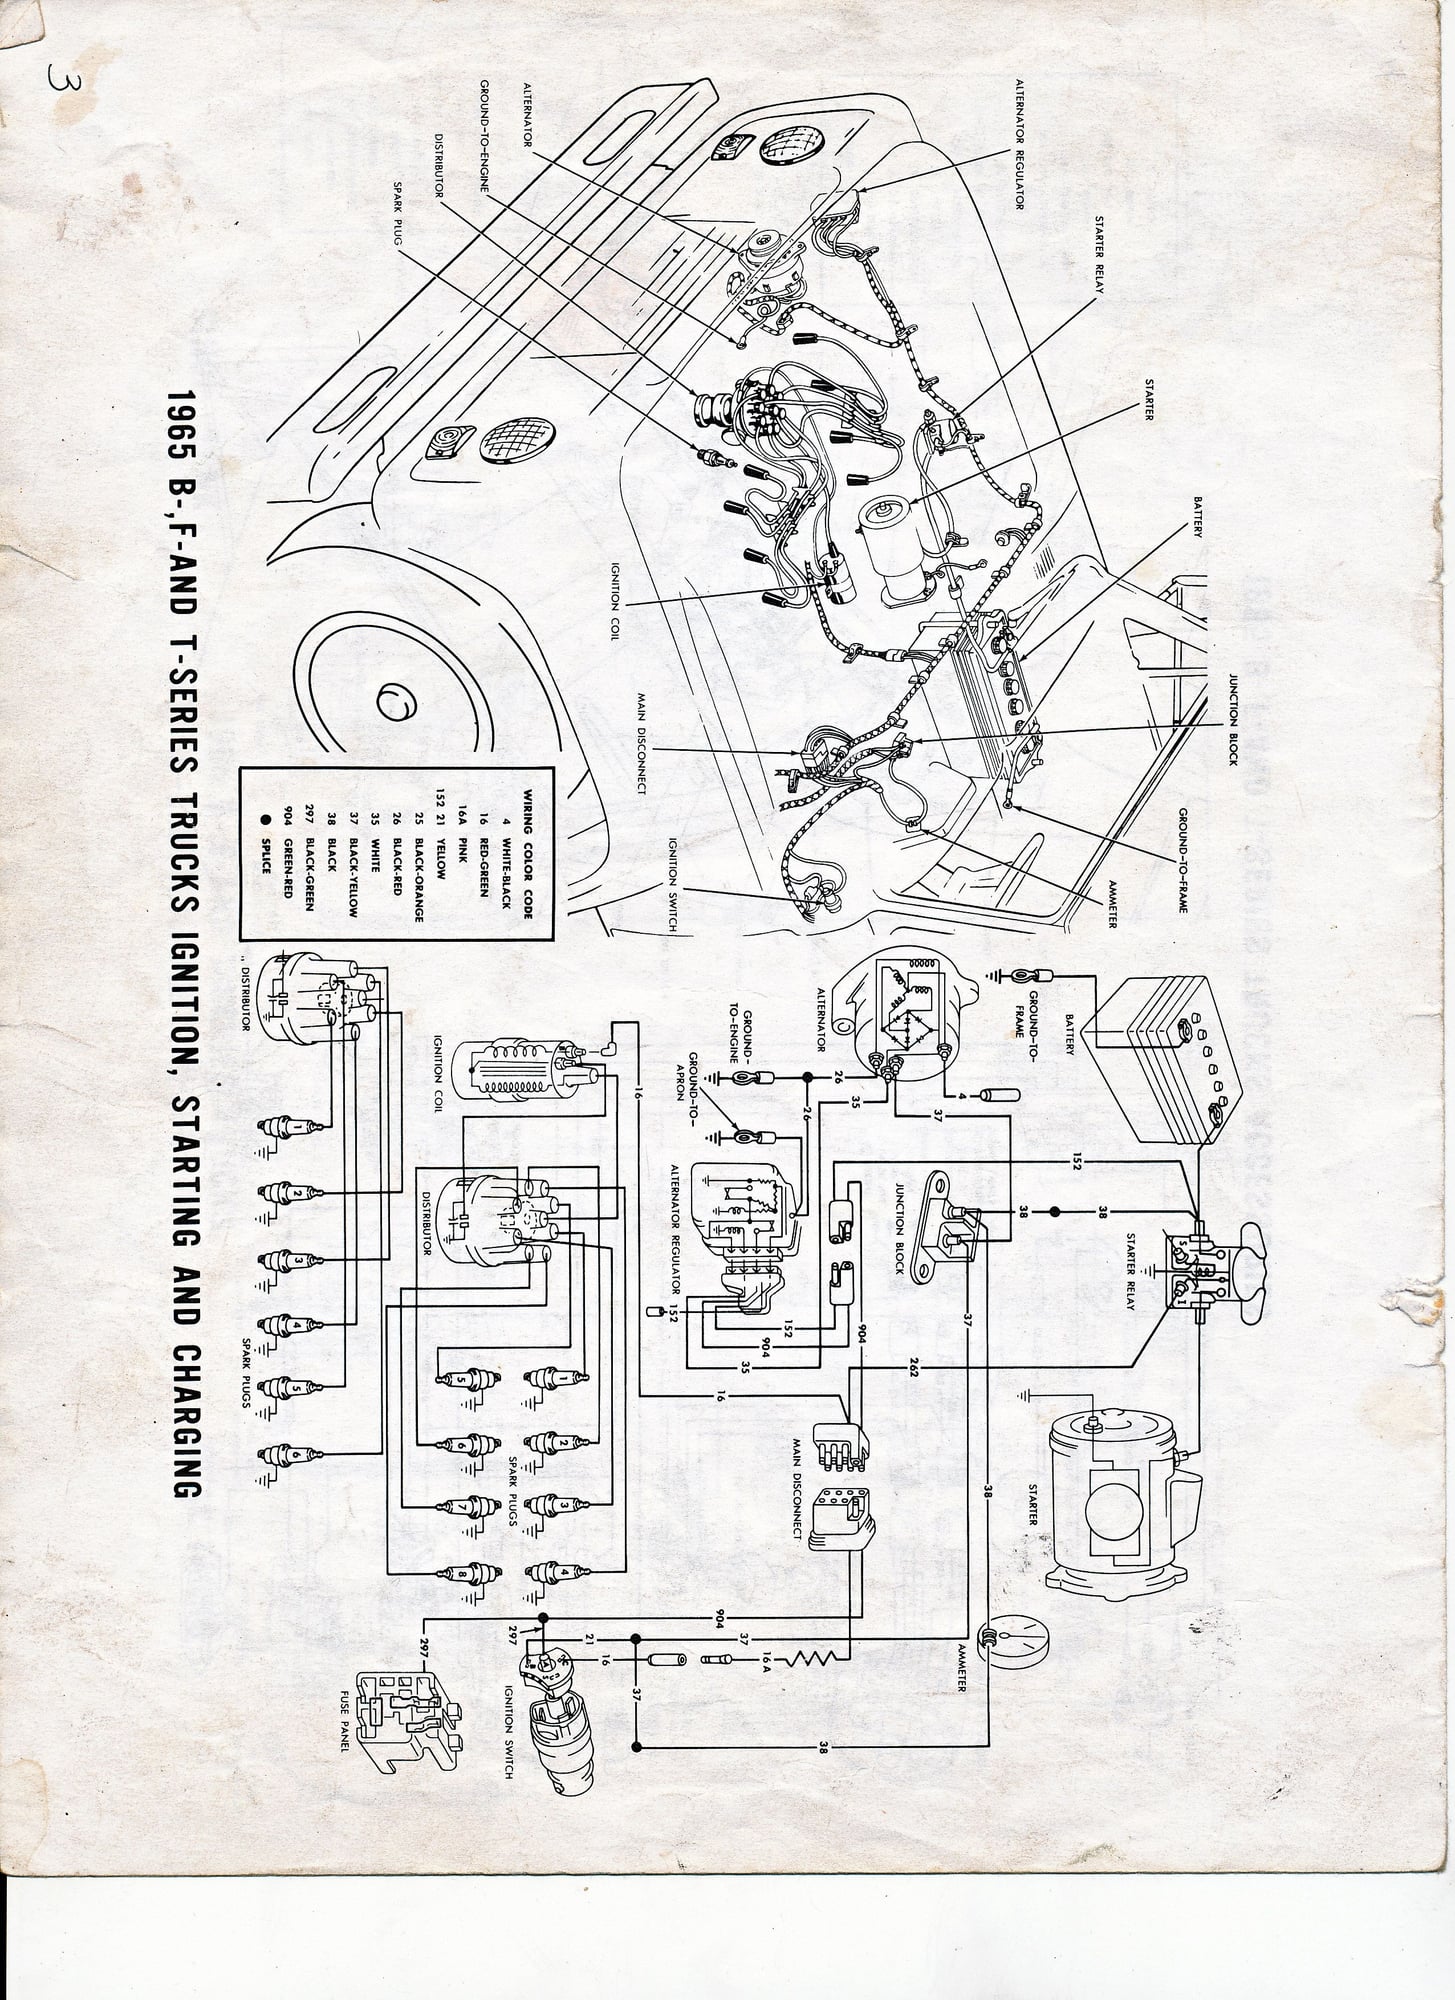 Ford 3000 Voltage Regulator Wiring Diagram from cimg8.ibsrv.net